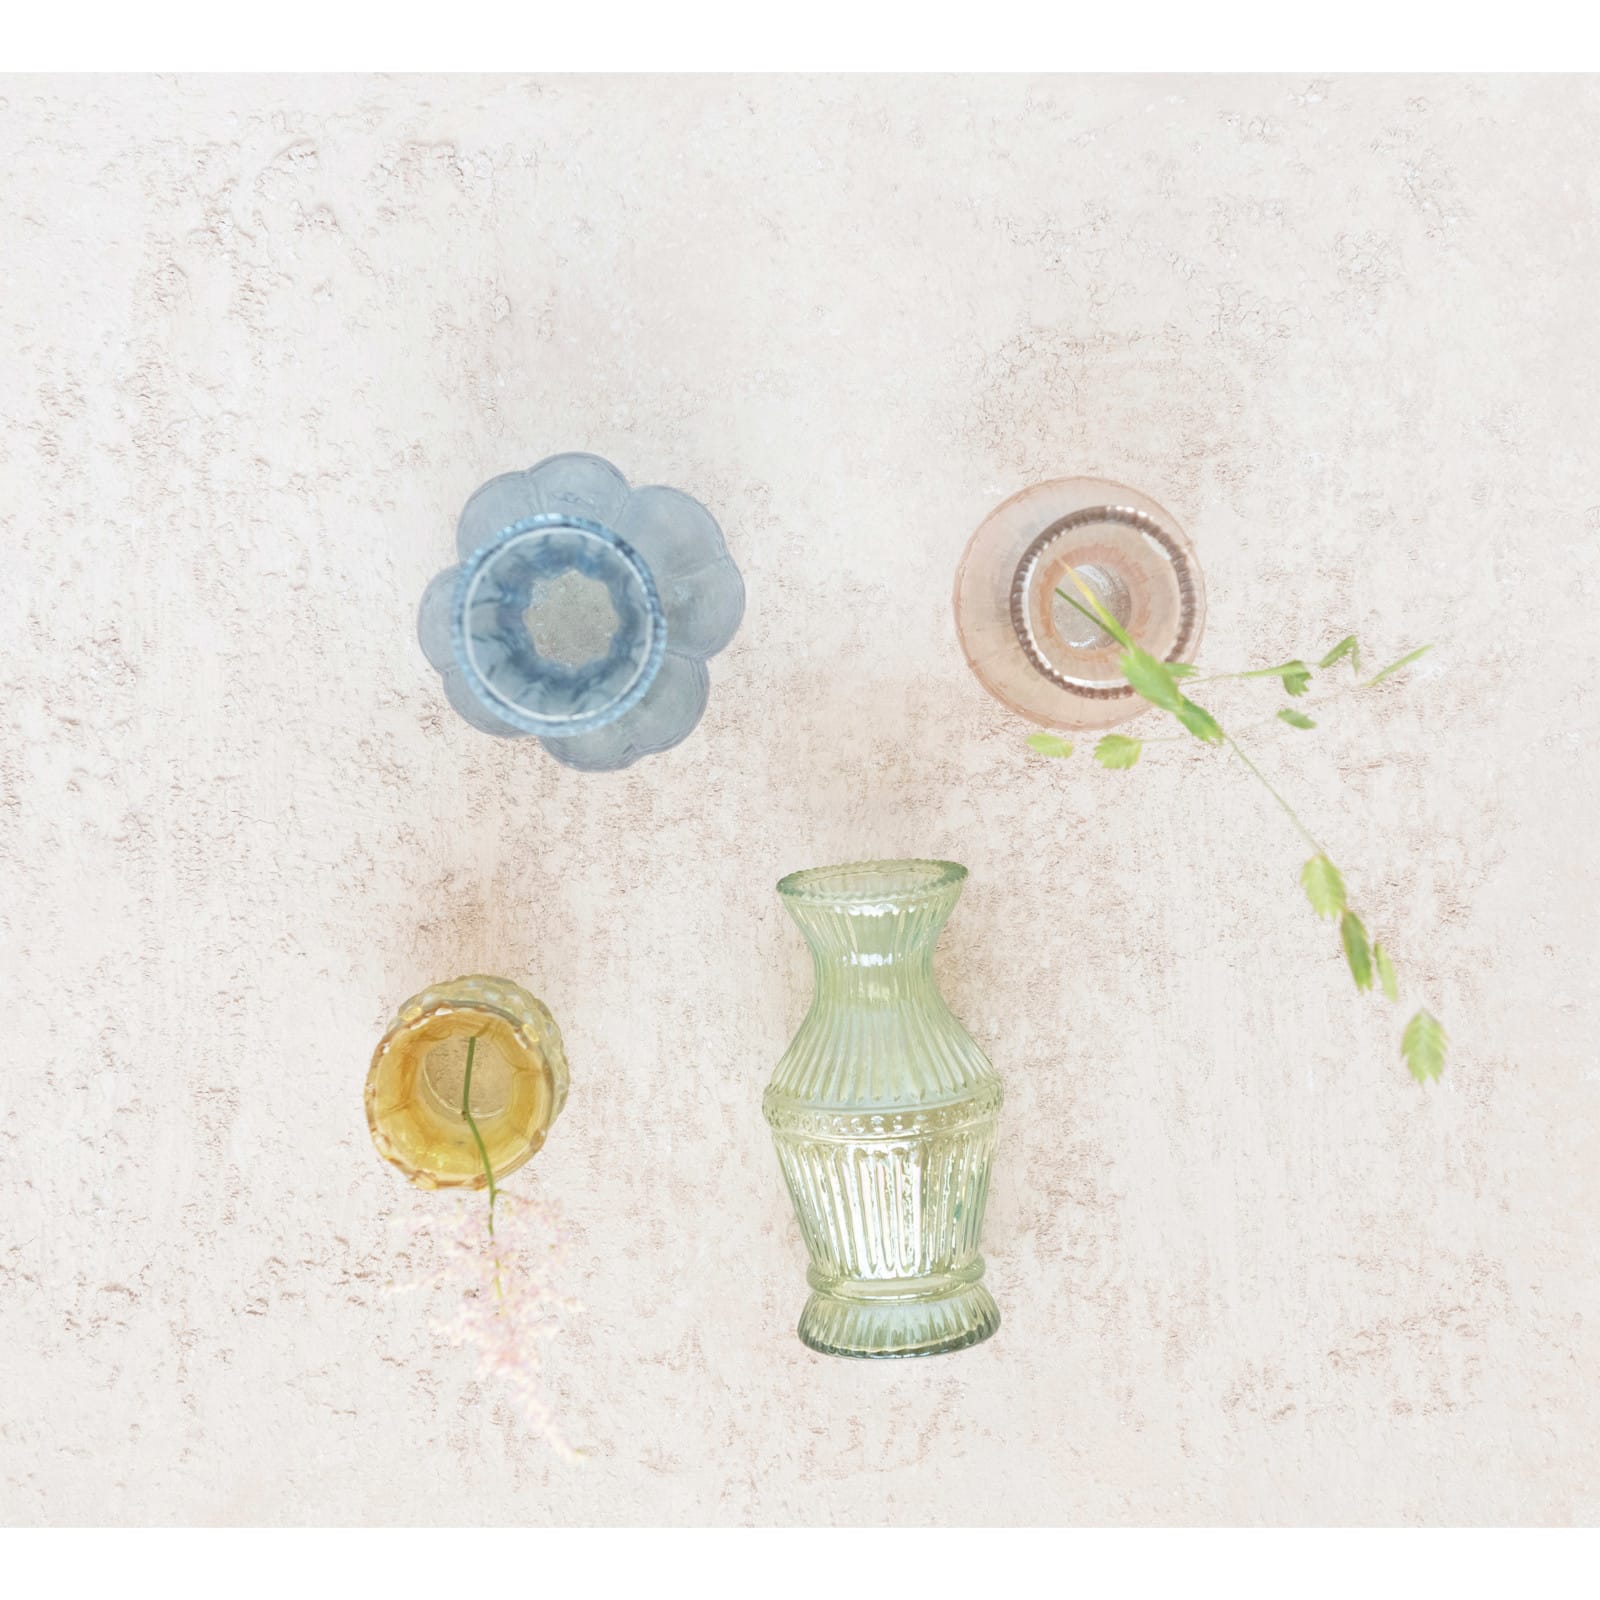 Debossed Colored Glass Vase Set